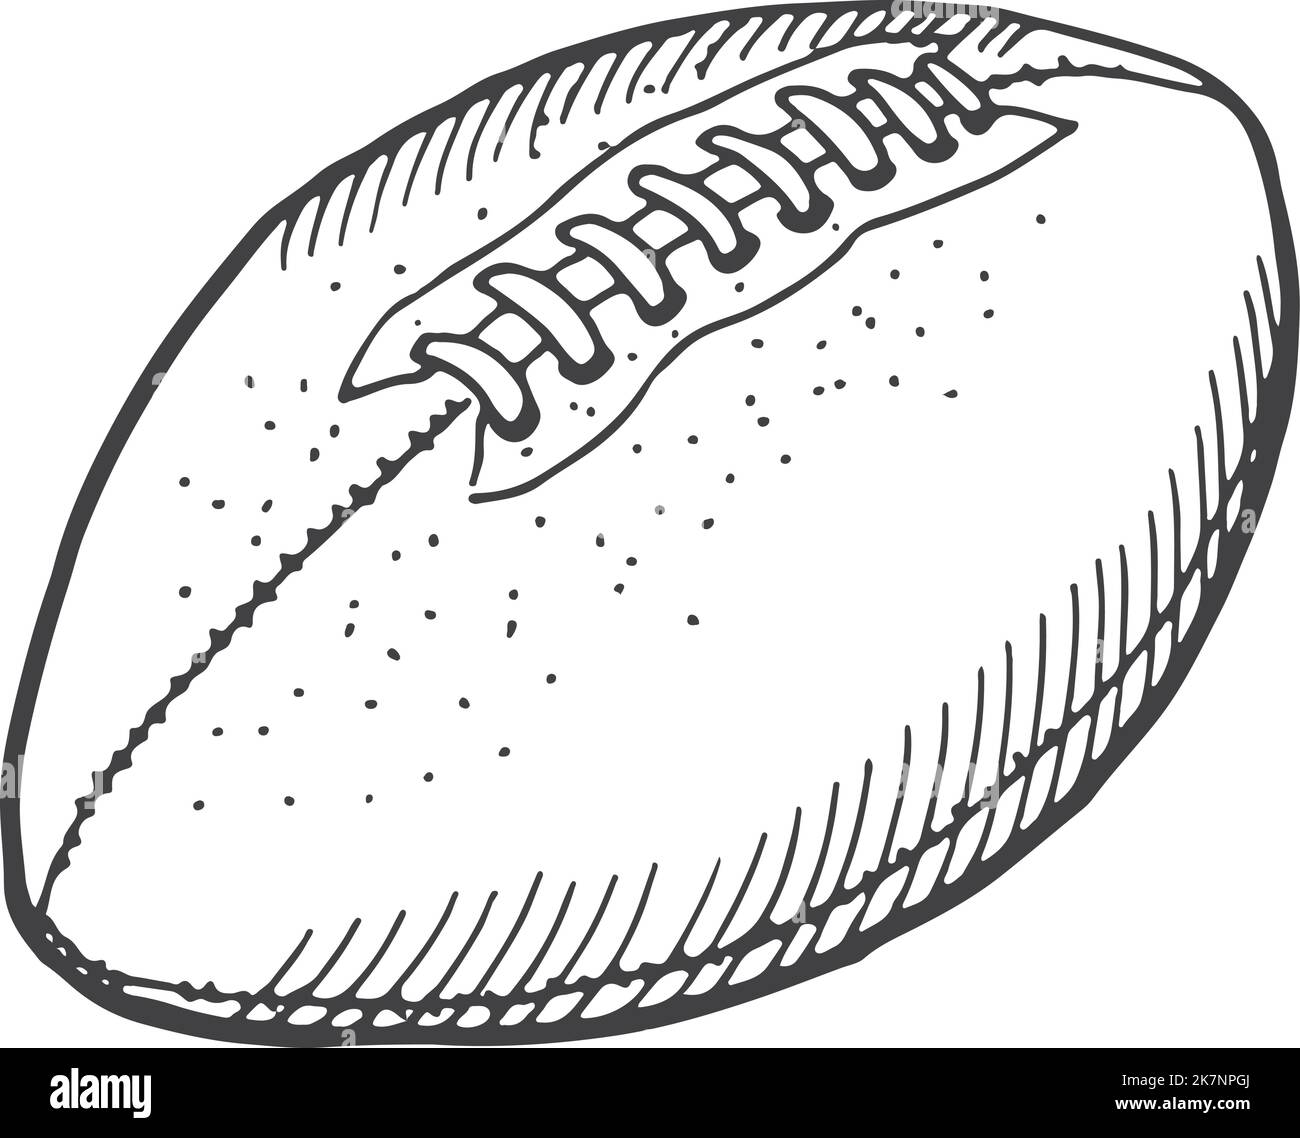 American football ball sketch. Sport game icon Stock Vector